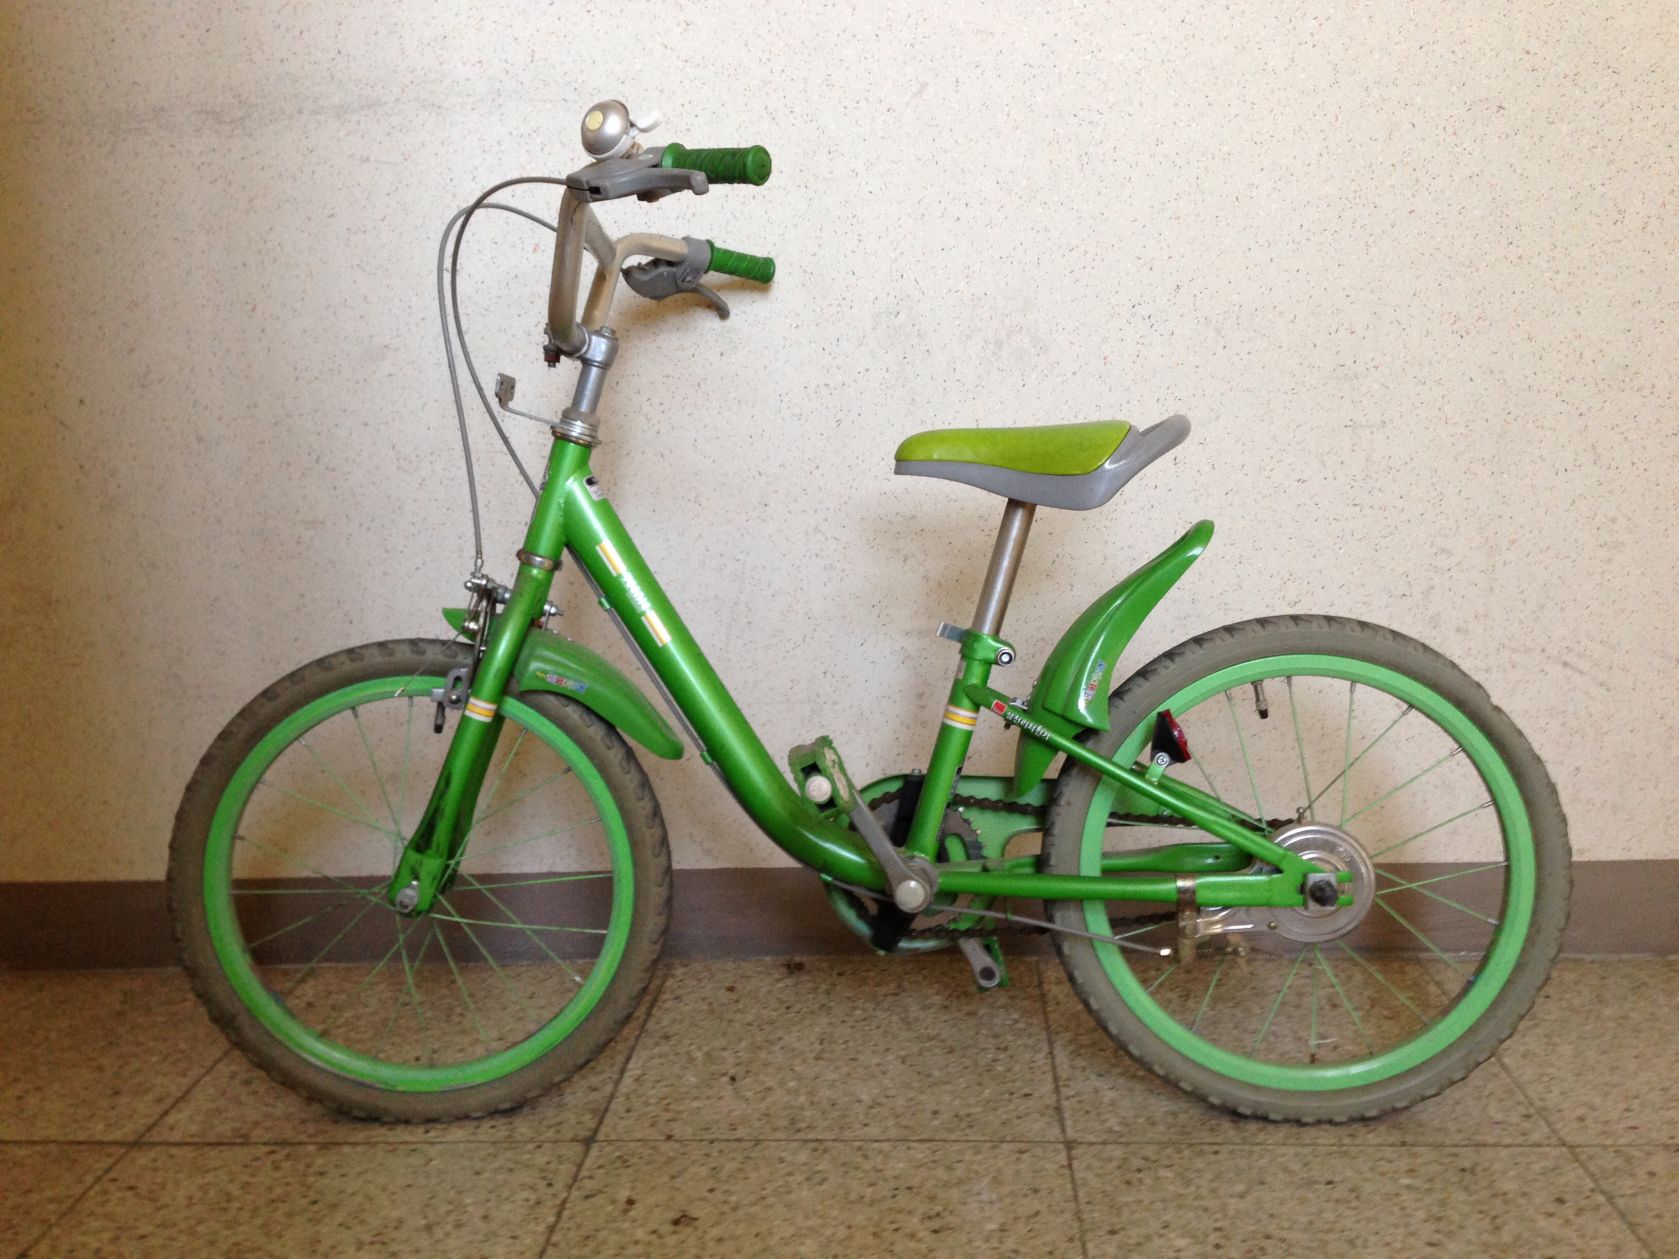 image.jpg : 저가형어린이용 자전거판매합니다 ~